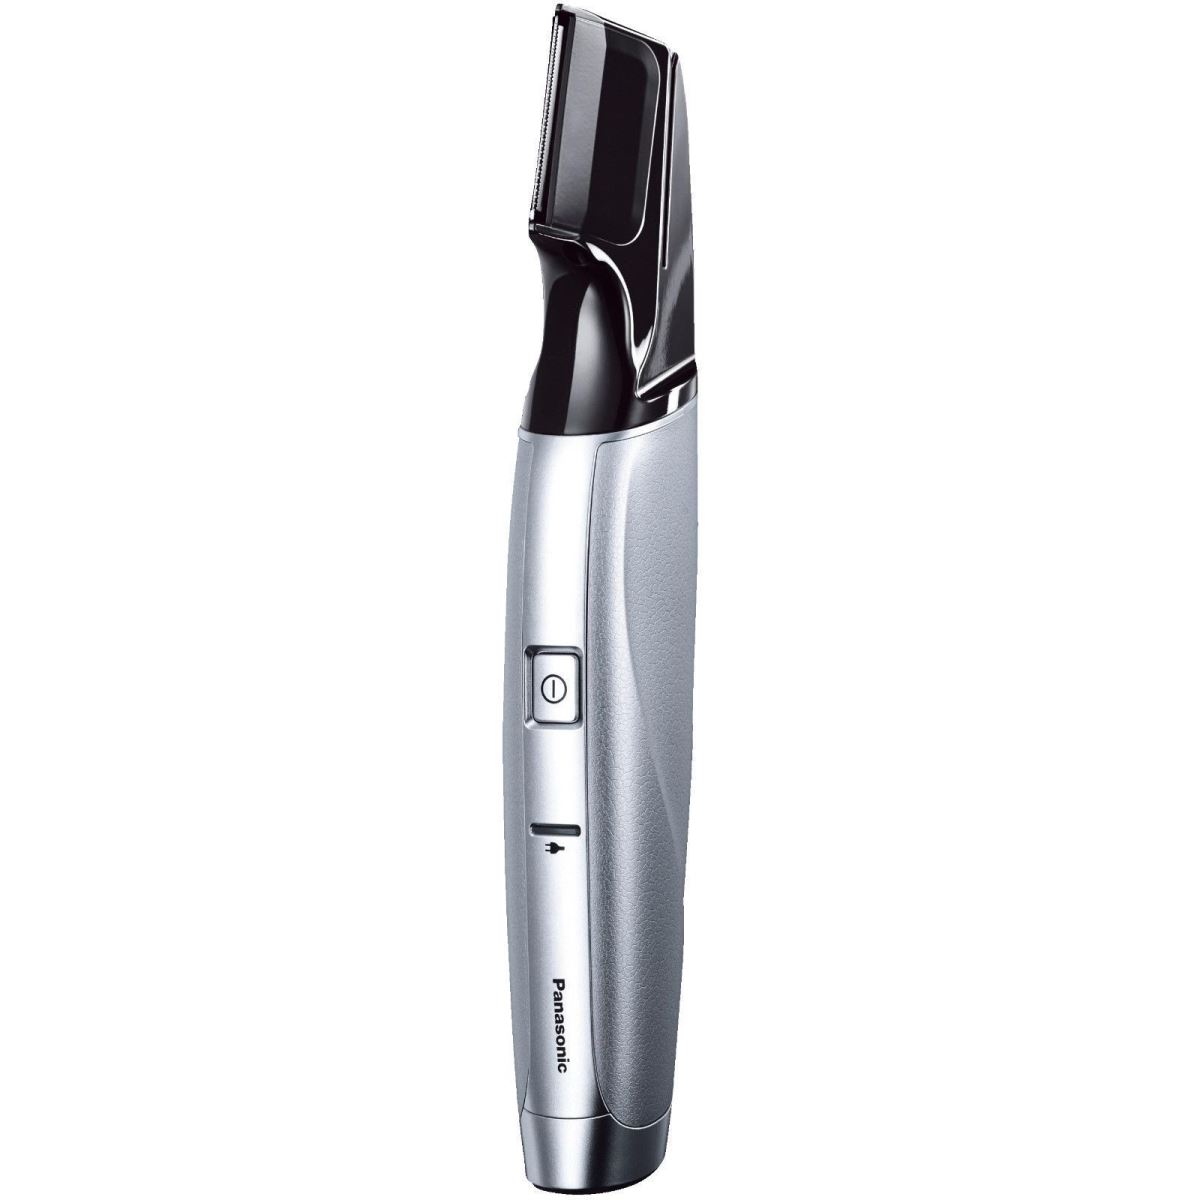 Trimmer pentru barba si par Panasonic ER-GD60-S803, 3 in 1, Ni-Mh, Aut. 50 min, 0,5- 10mm, Negru/Argintiu